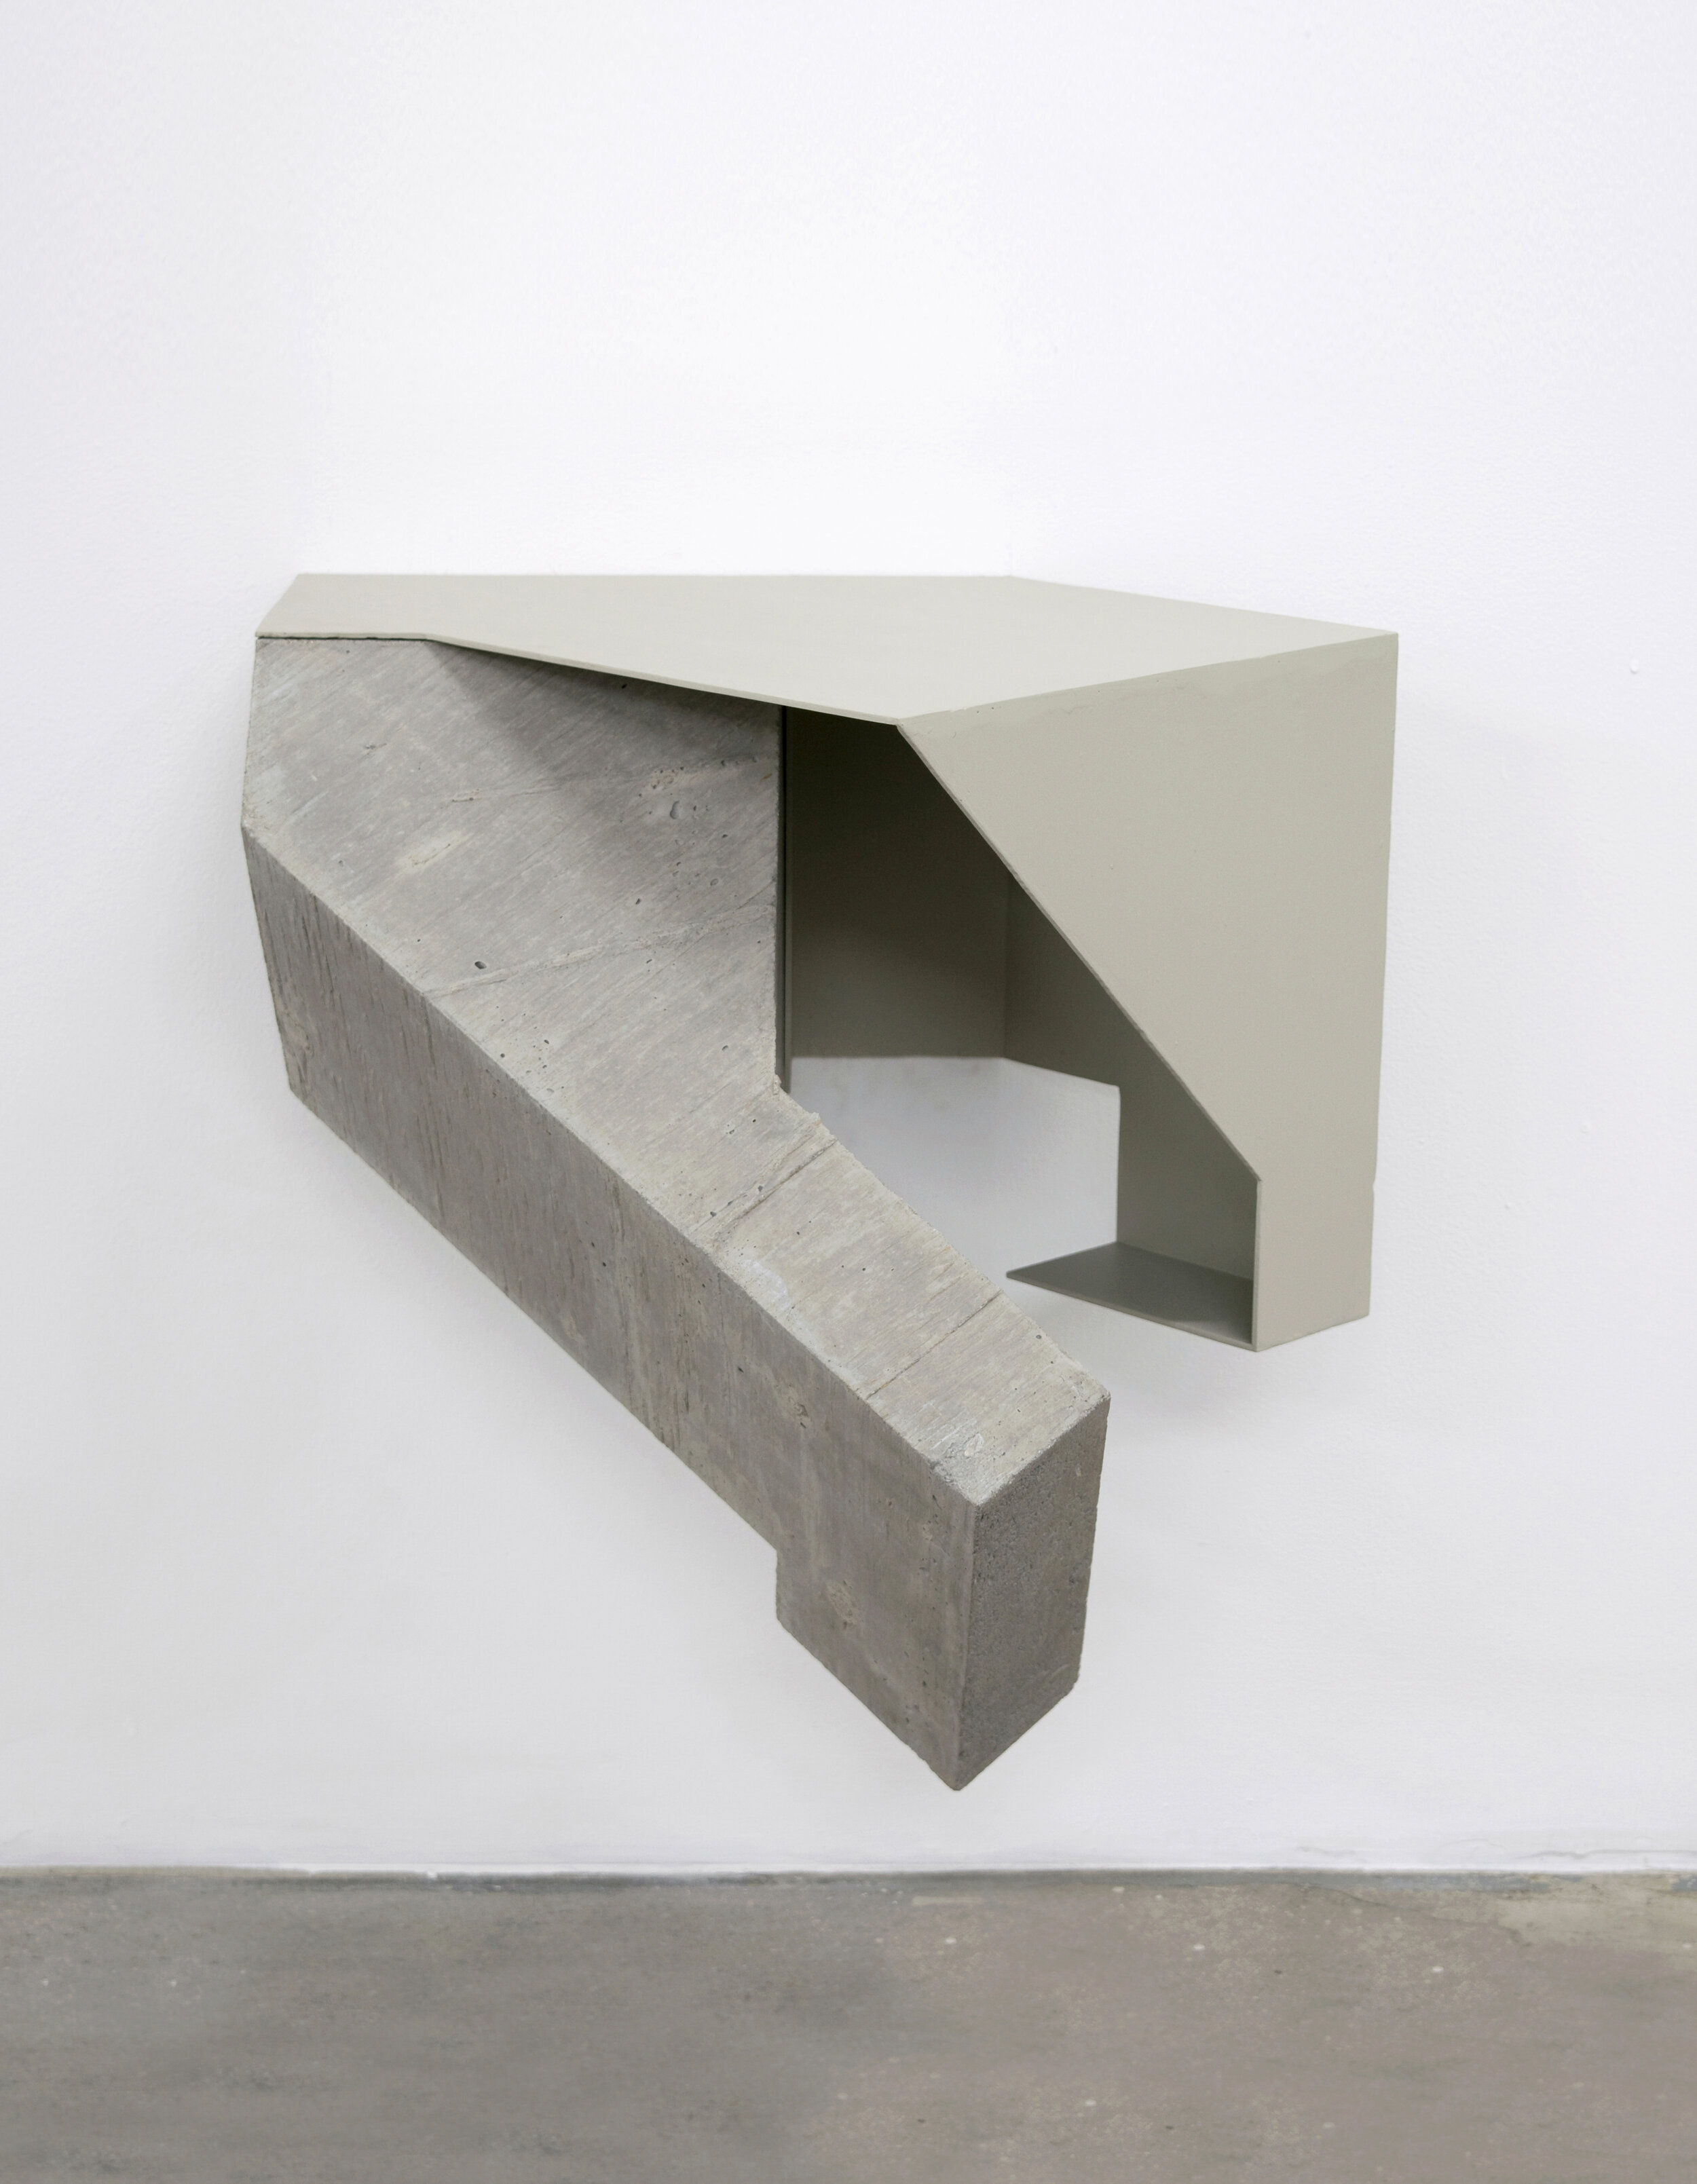  Jen Aitken  Daultic , 2019 fiber-reinforced concrete, ceramic inlay, polystyrene foam, stainless steel hardware 20 x 20 x 15 in (50.8 x 50.8 x 38.1 cm) 